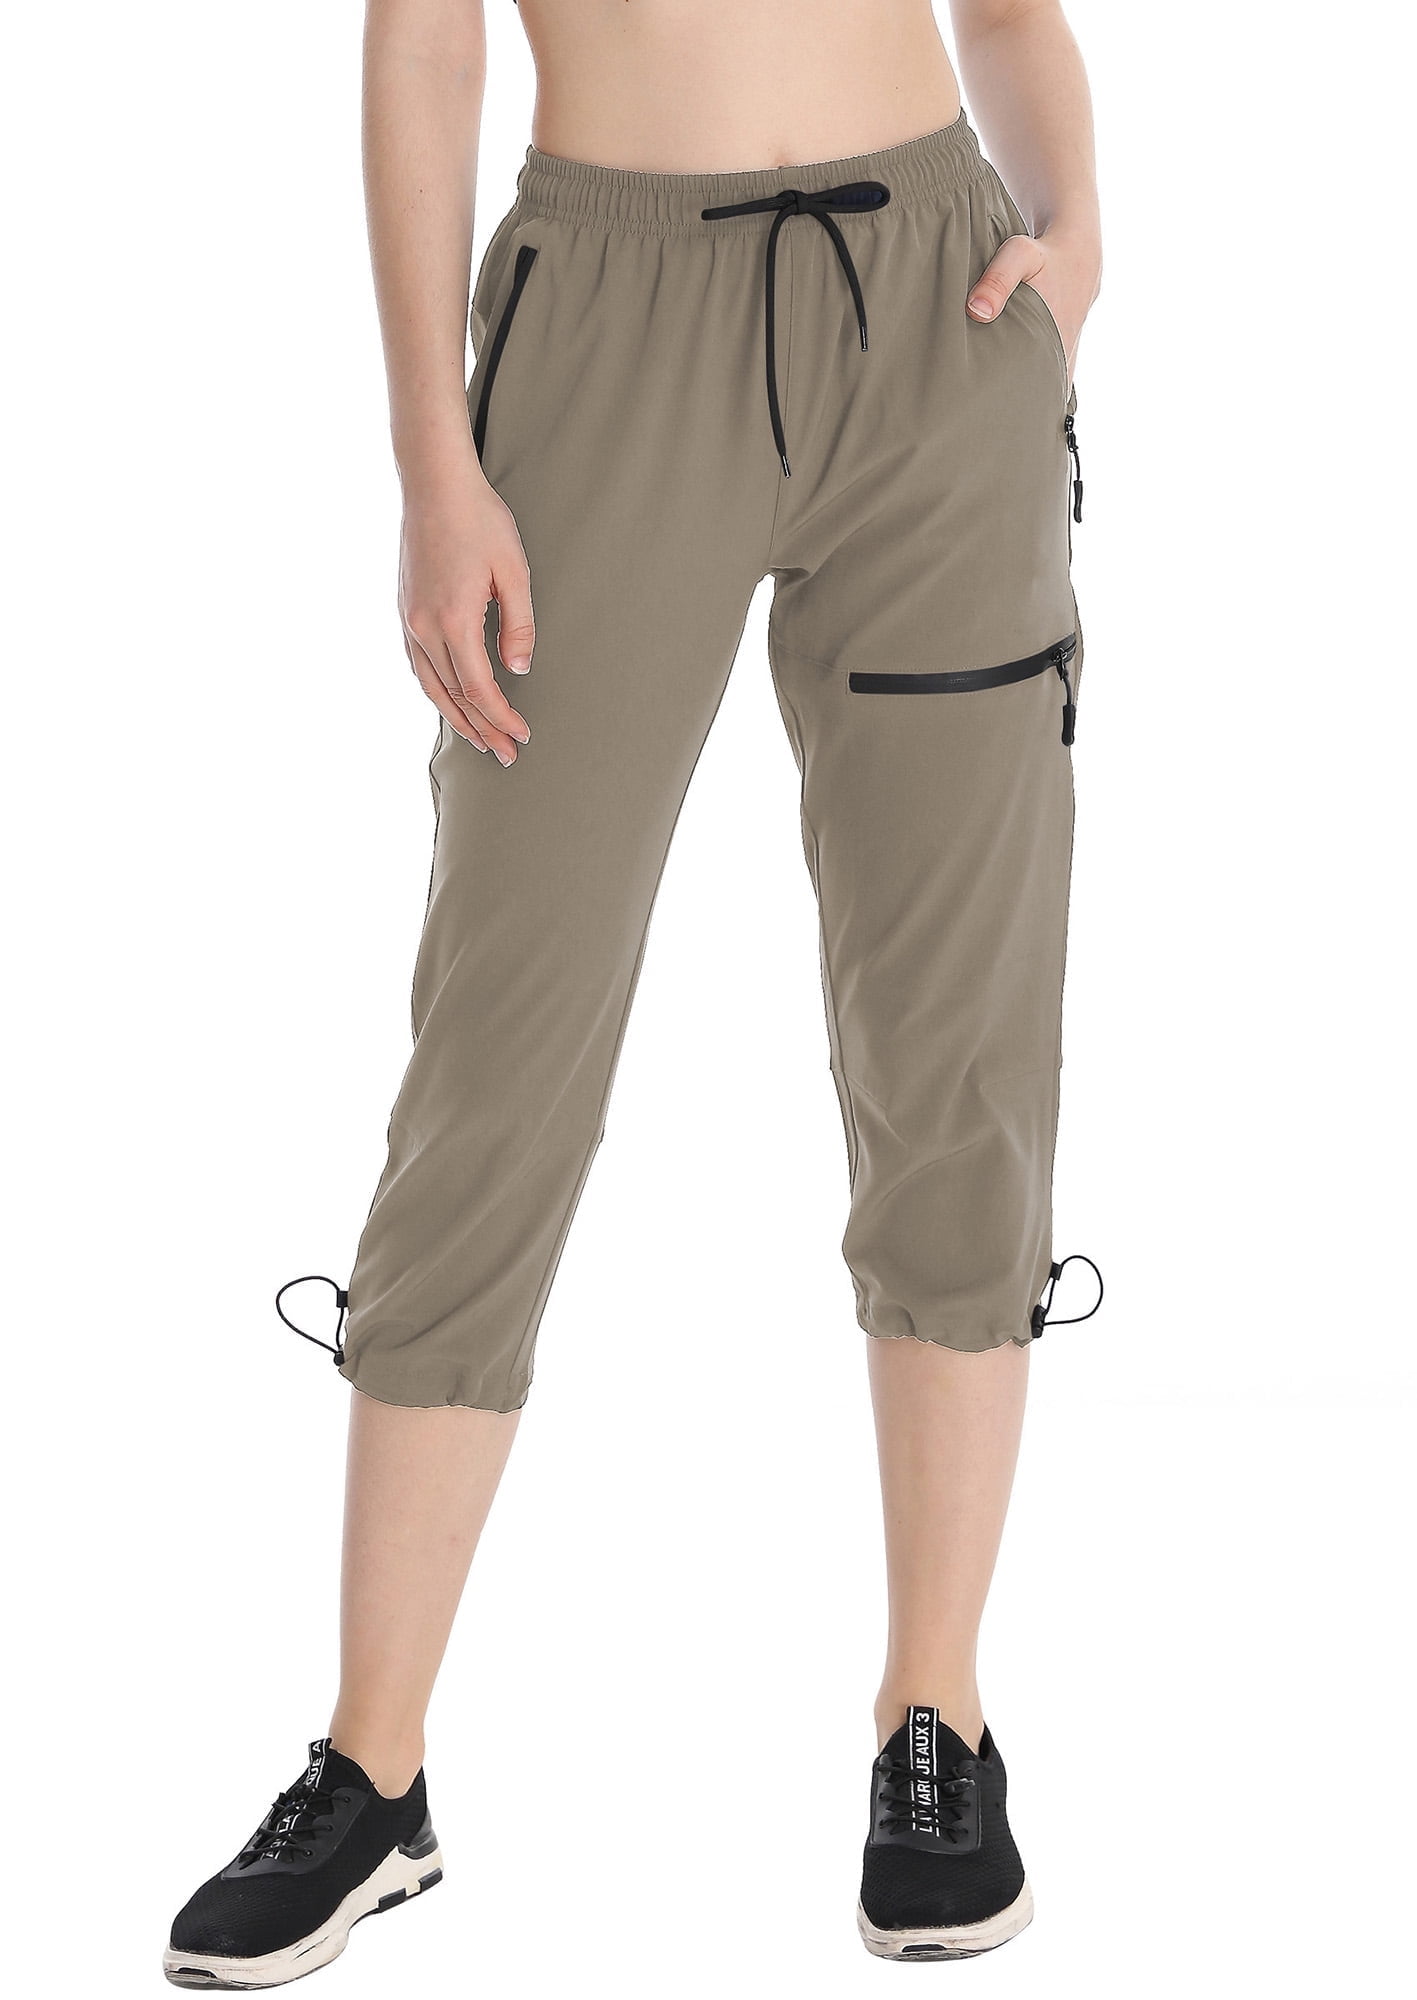 Wespornow Hiking-Pants-Women Convertible Zip-Off Pants Lightweight Qui